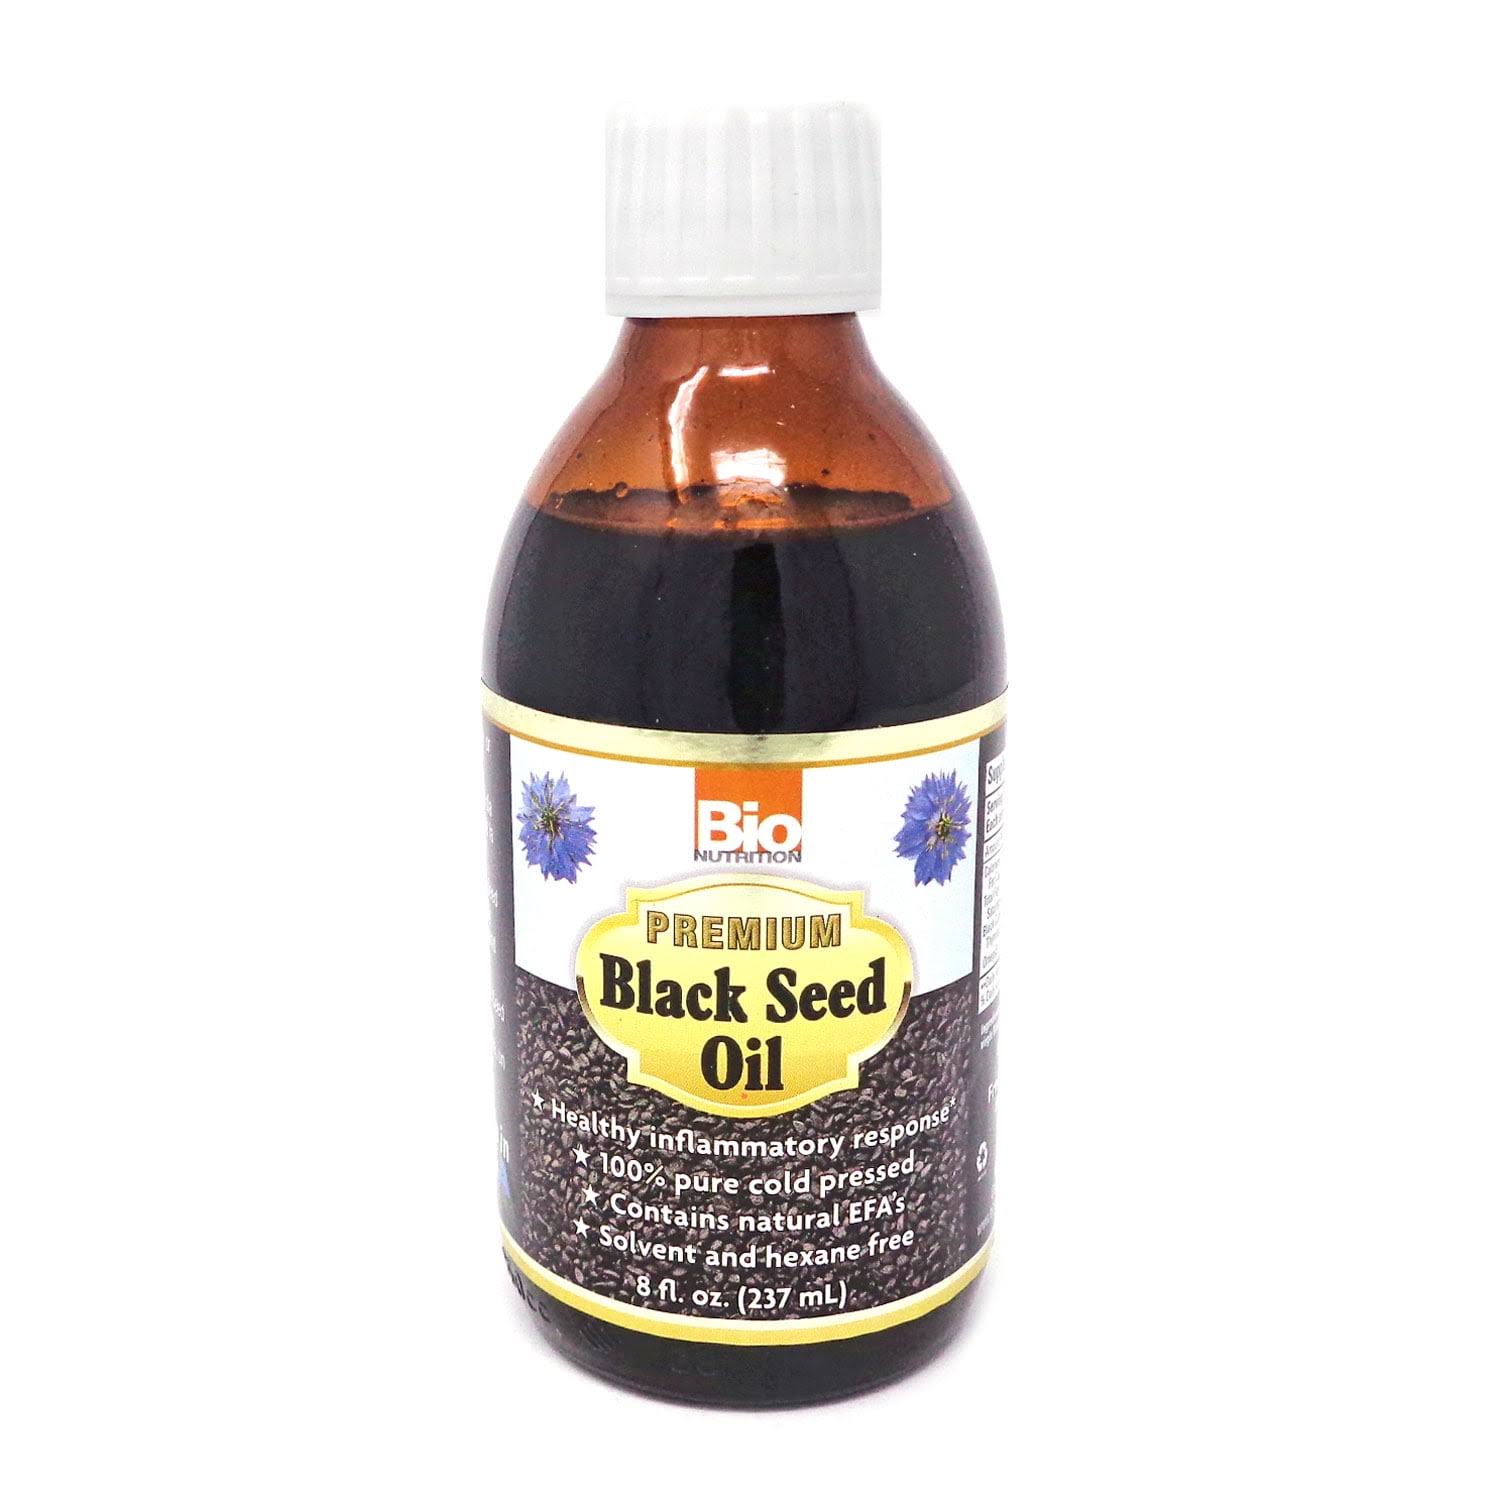 Bio Nutrition Premium Black Seed Oil - 8oz